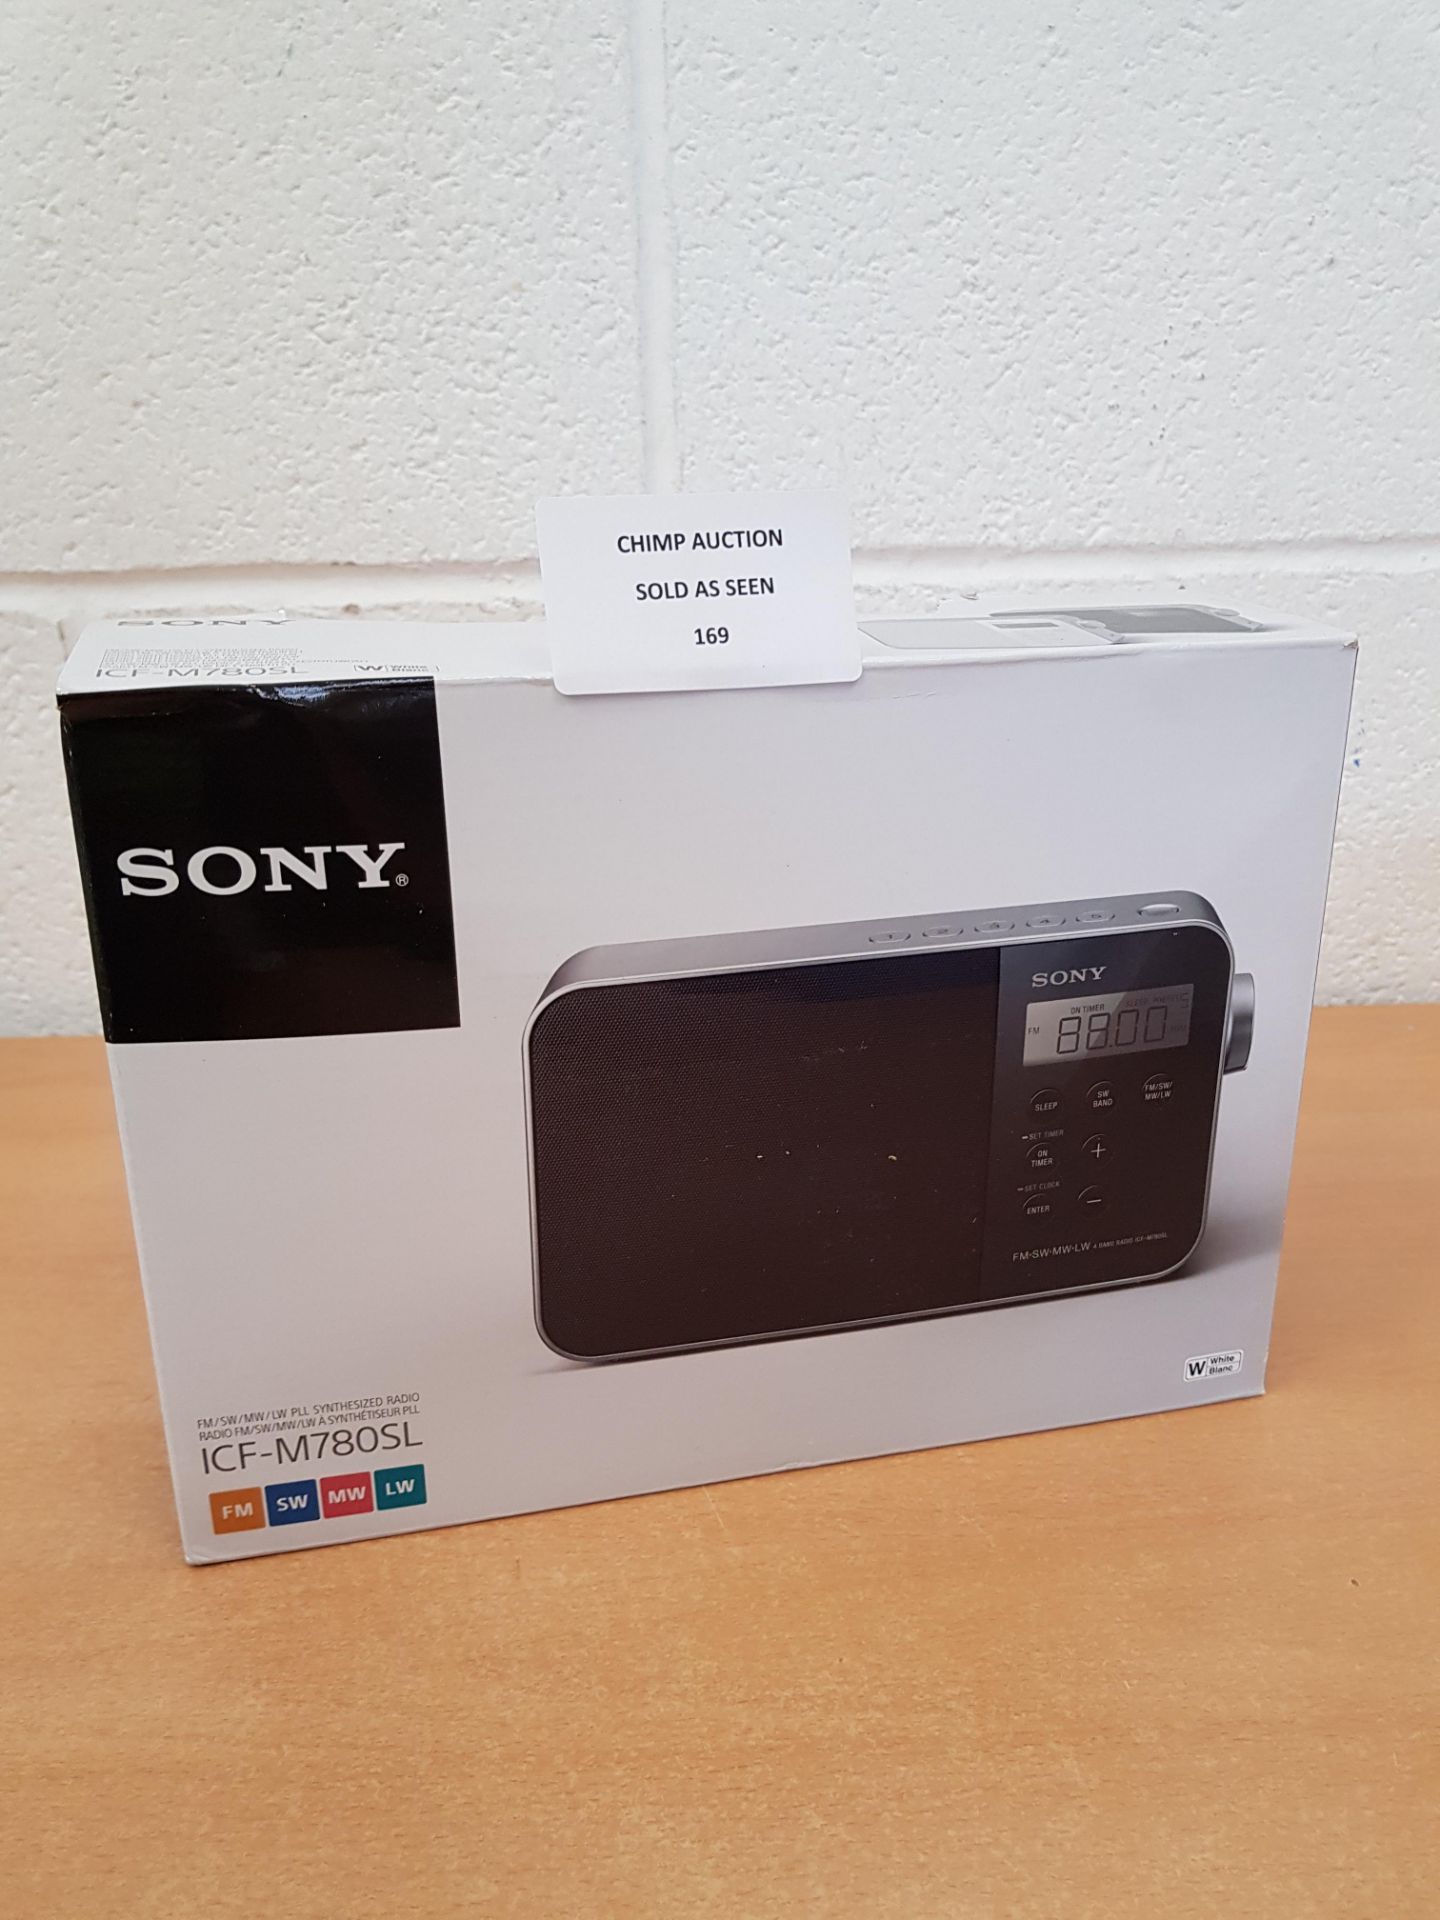 Brand new Sony ICF-M780SL Portable Radio with LED Display RRP £79.99